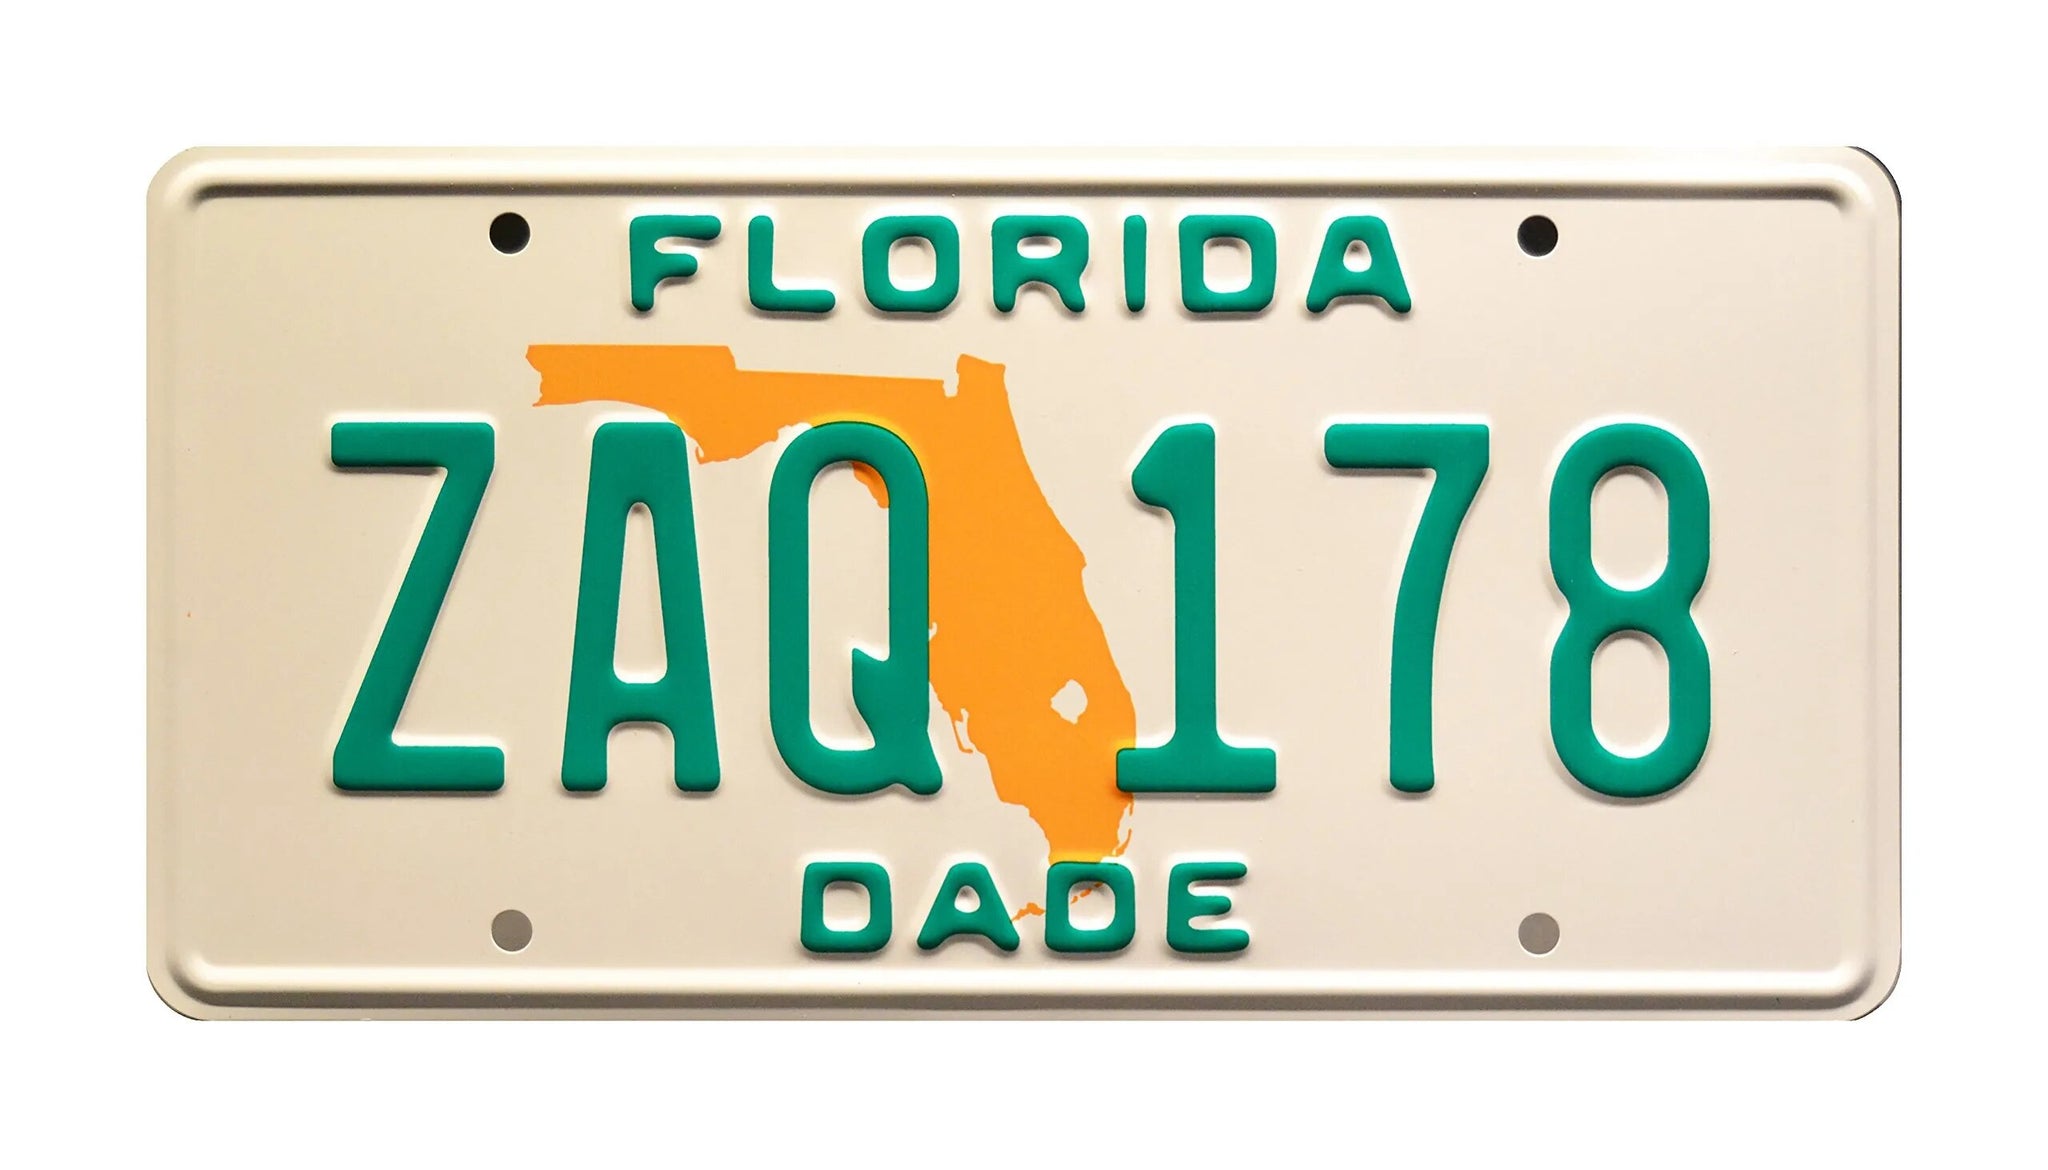 Targa decorativa per auto vintage – Florida Miami Vice-